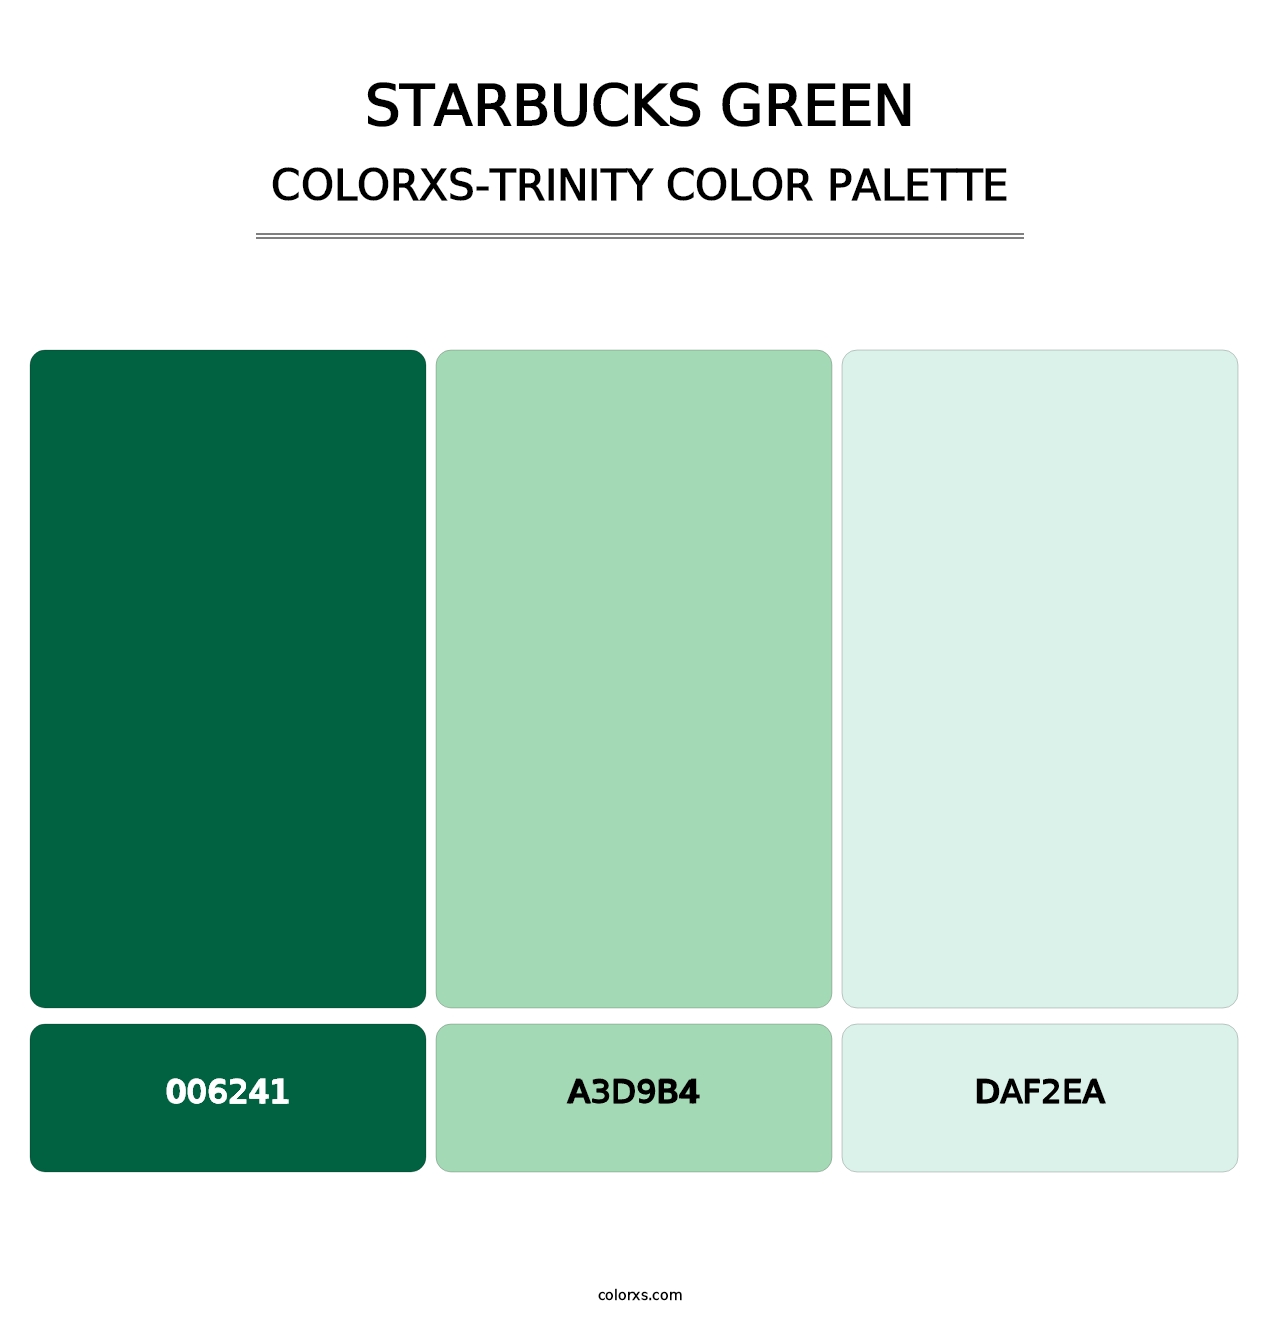 Starbucks Green - Colorxs Trinity Palette